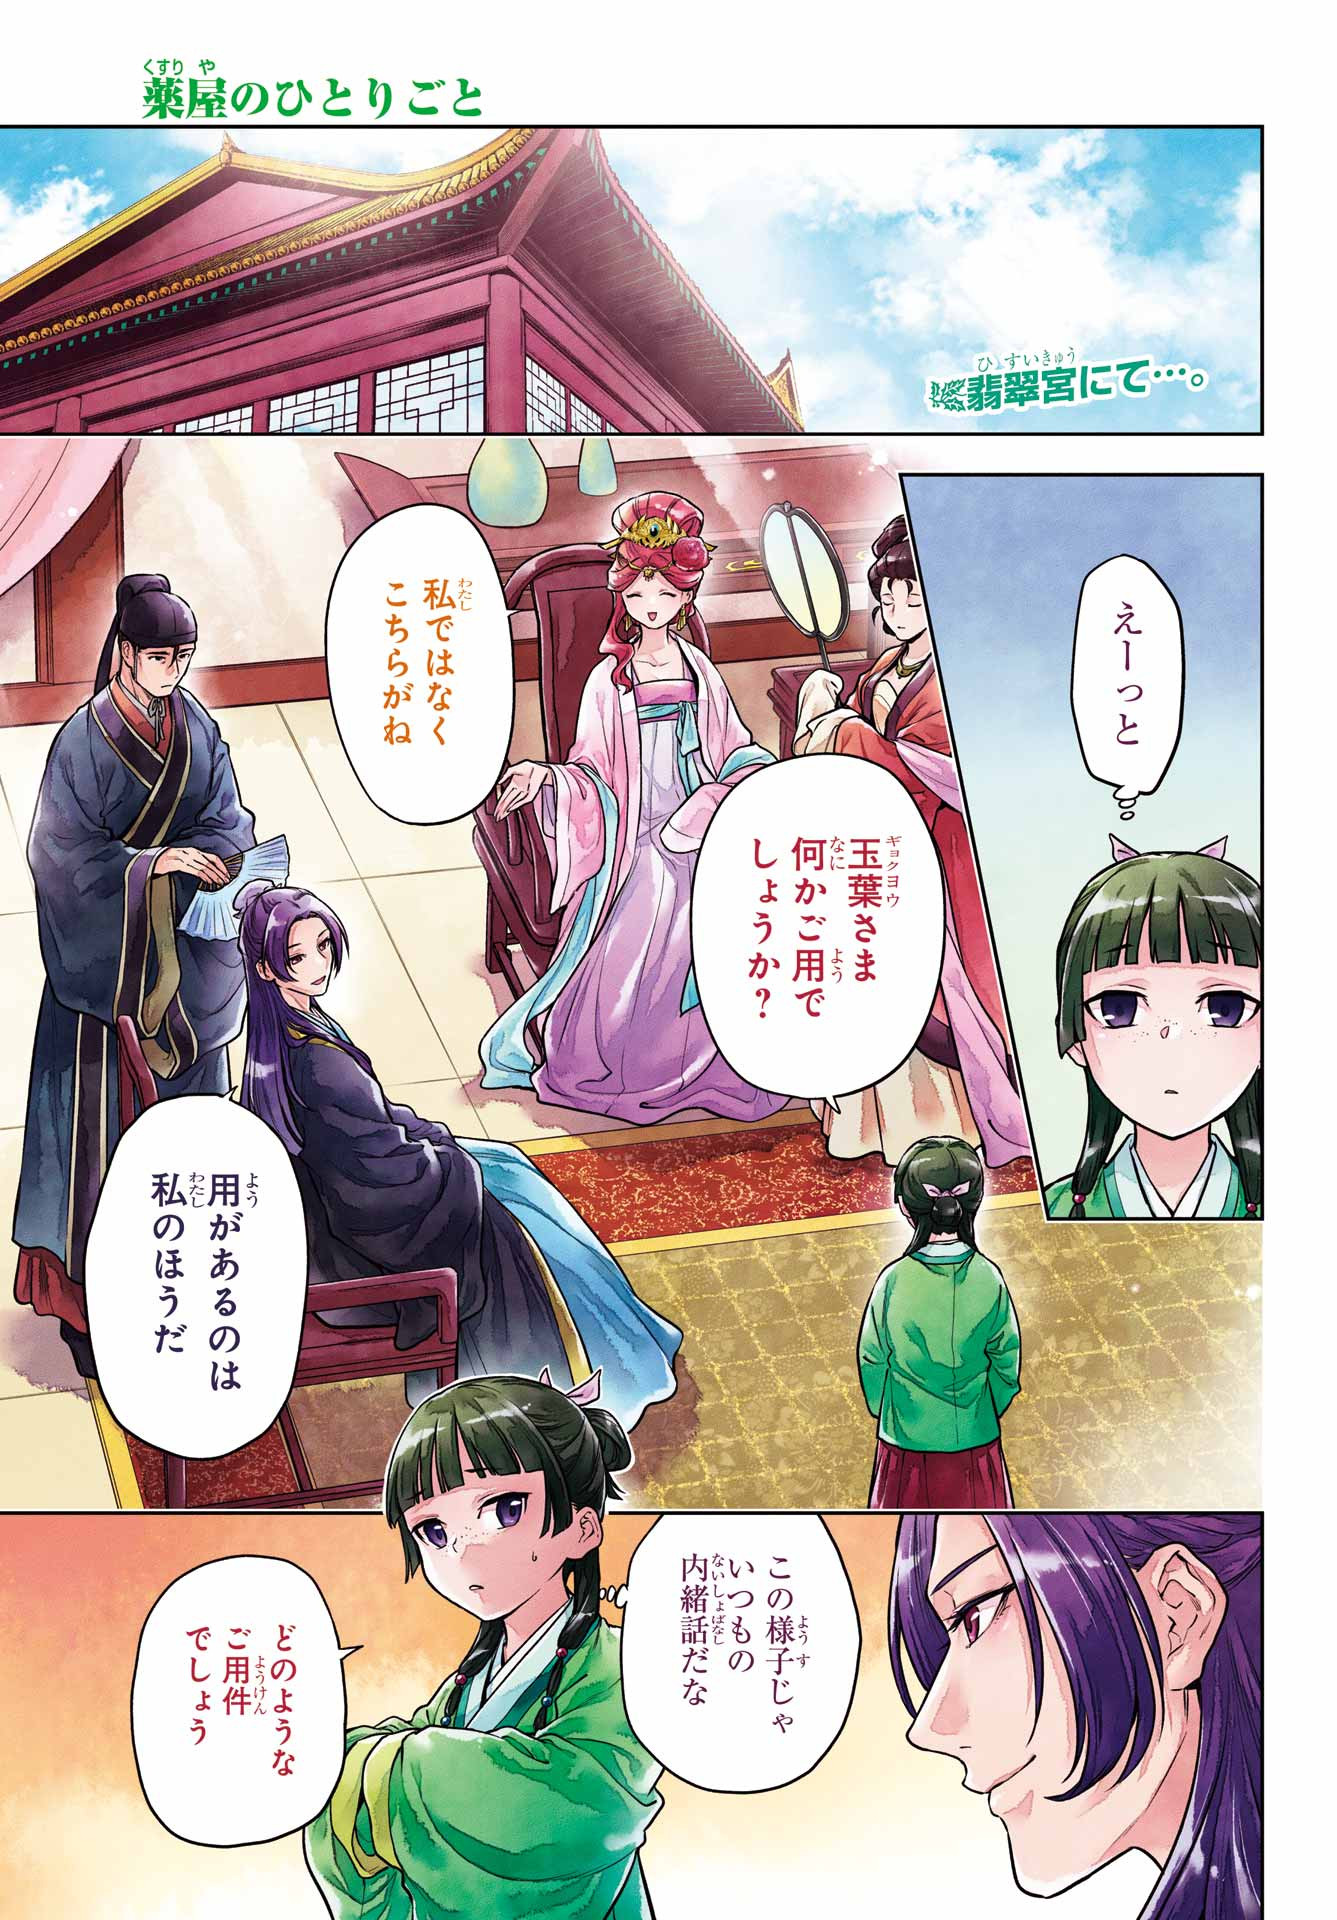 Kusuriya no Hitorigoto - Chapter 60-1 - Page 2